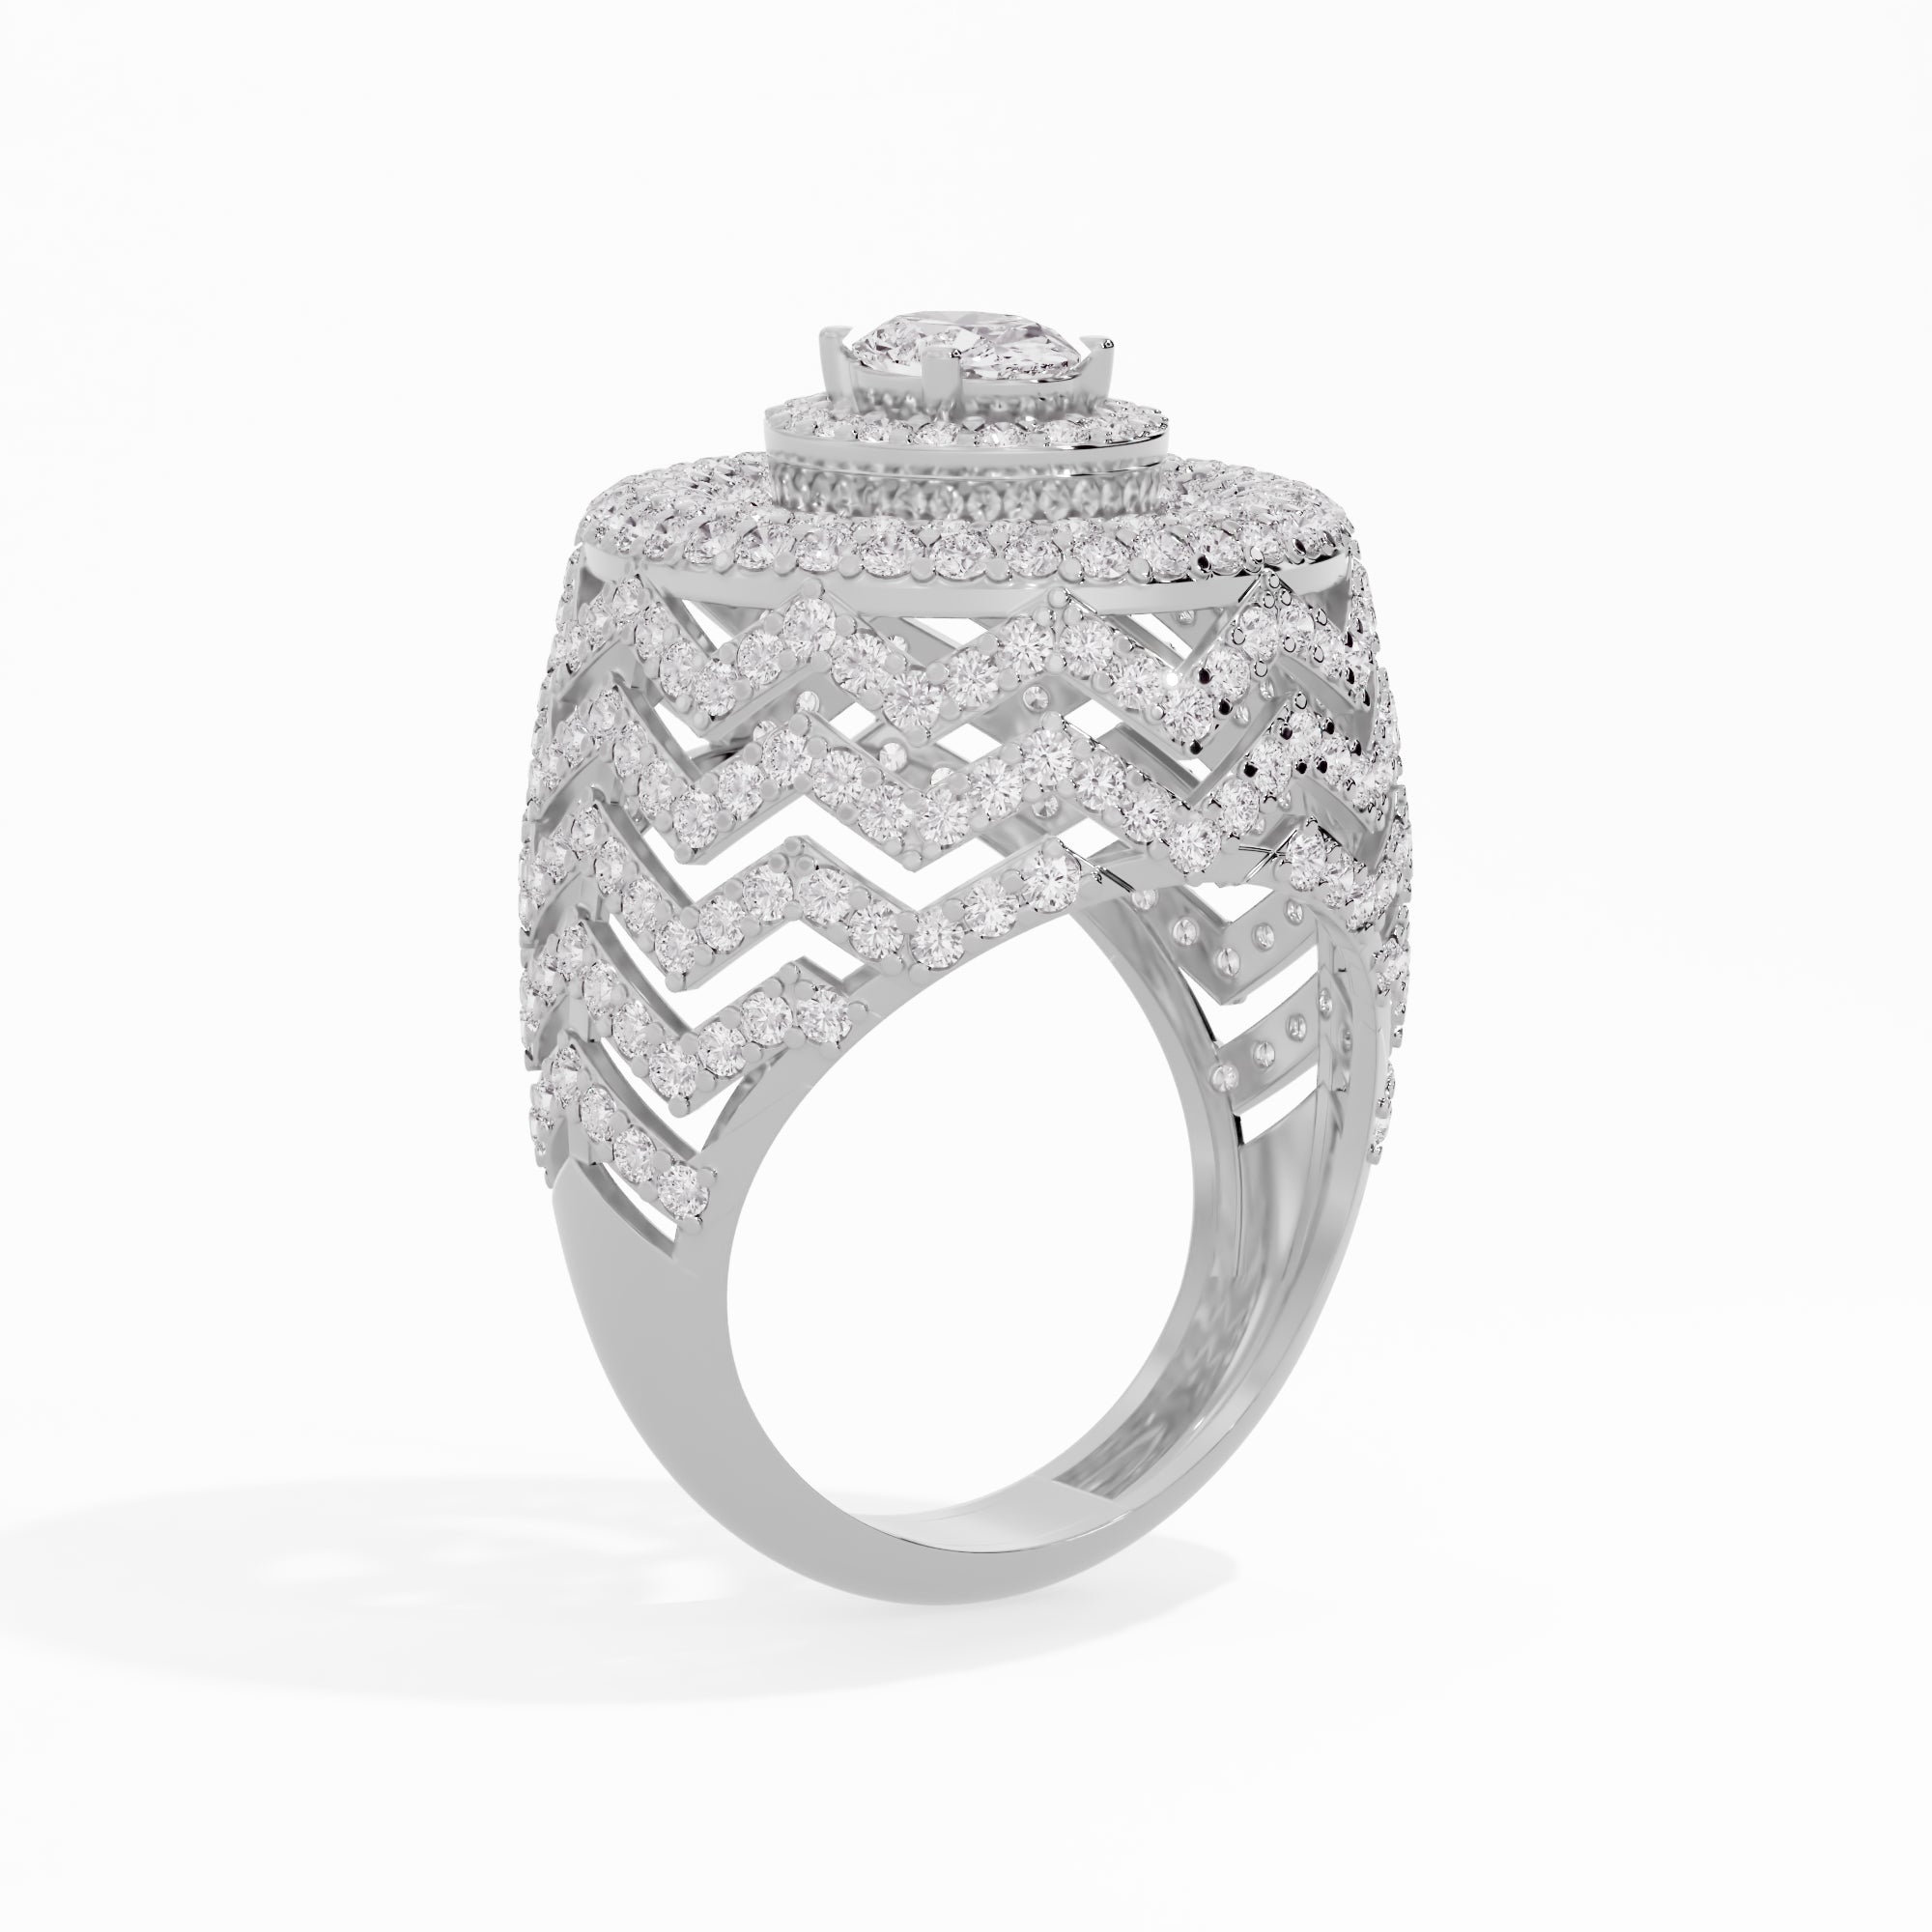 Attractive Radiance Diamond Ring